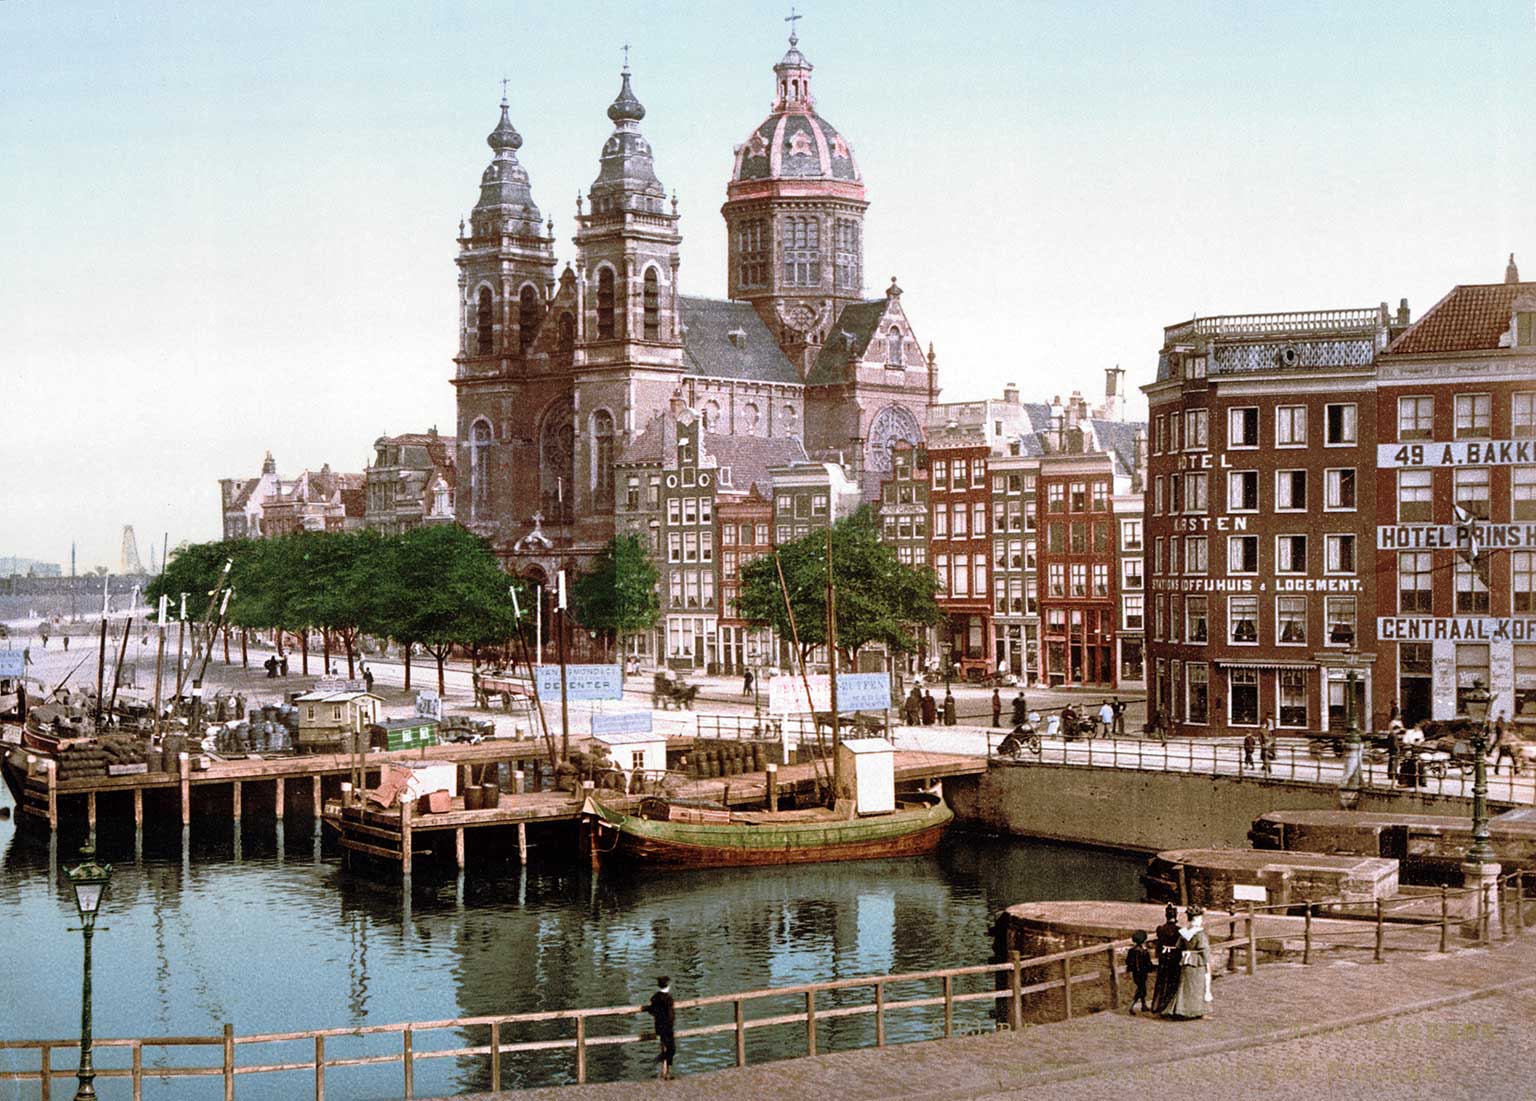 St. Nicholas Church, Amsterdam, on a postcard from around 1900